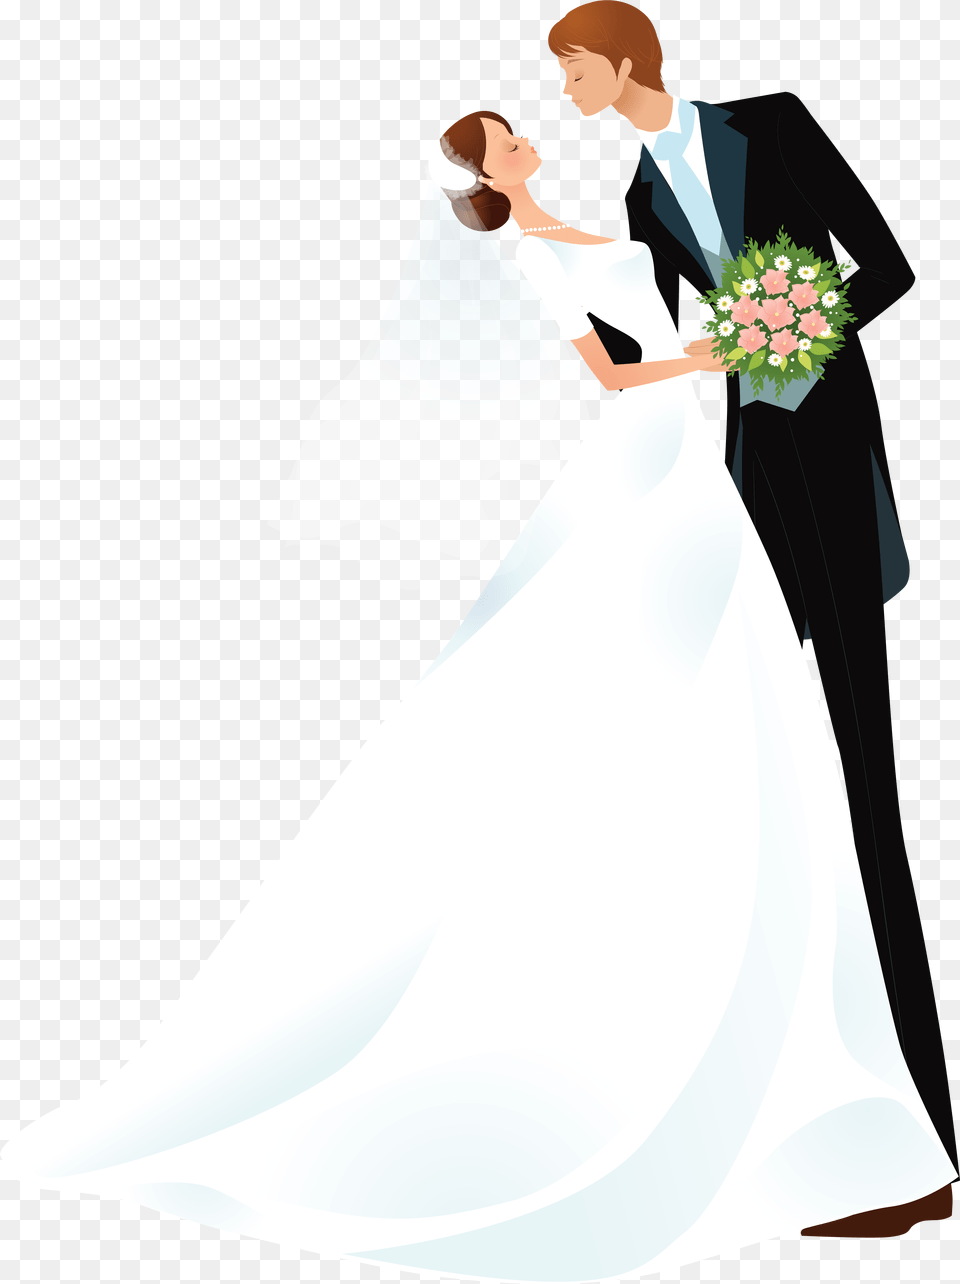 Bride And Groom Cartoon Wedding, Flower Bouquet, Gown, Flower Arrangement, Flower Free Png Download